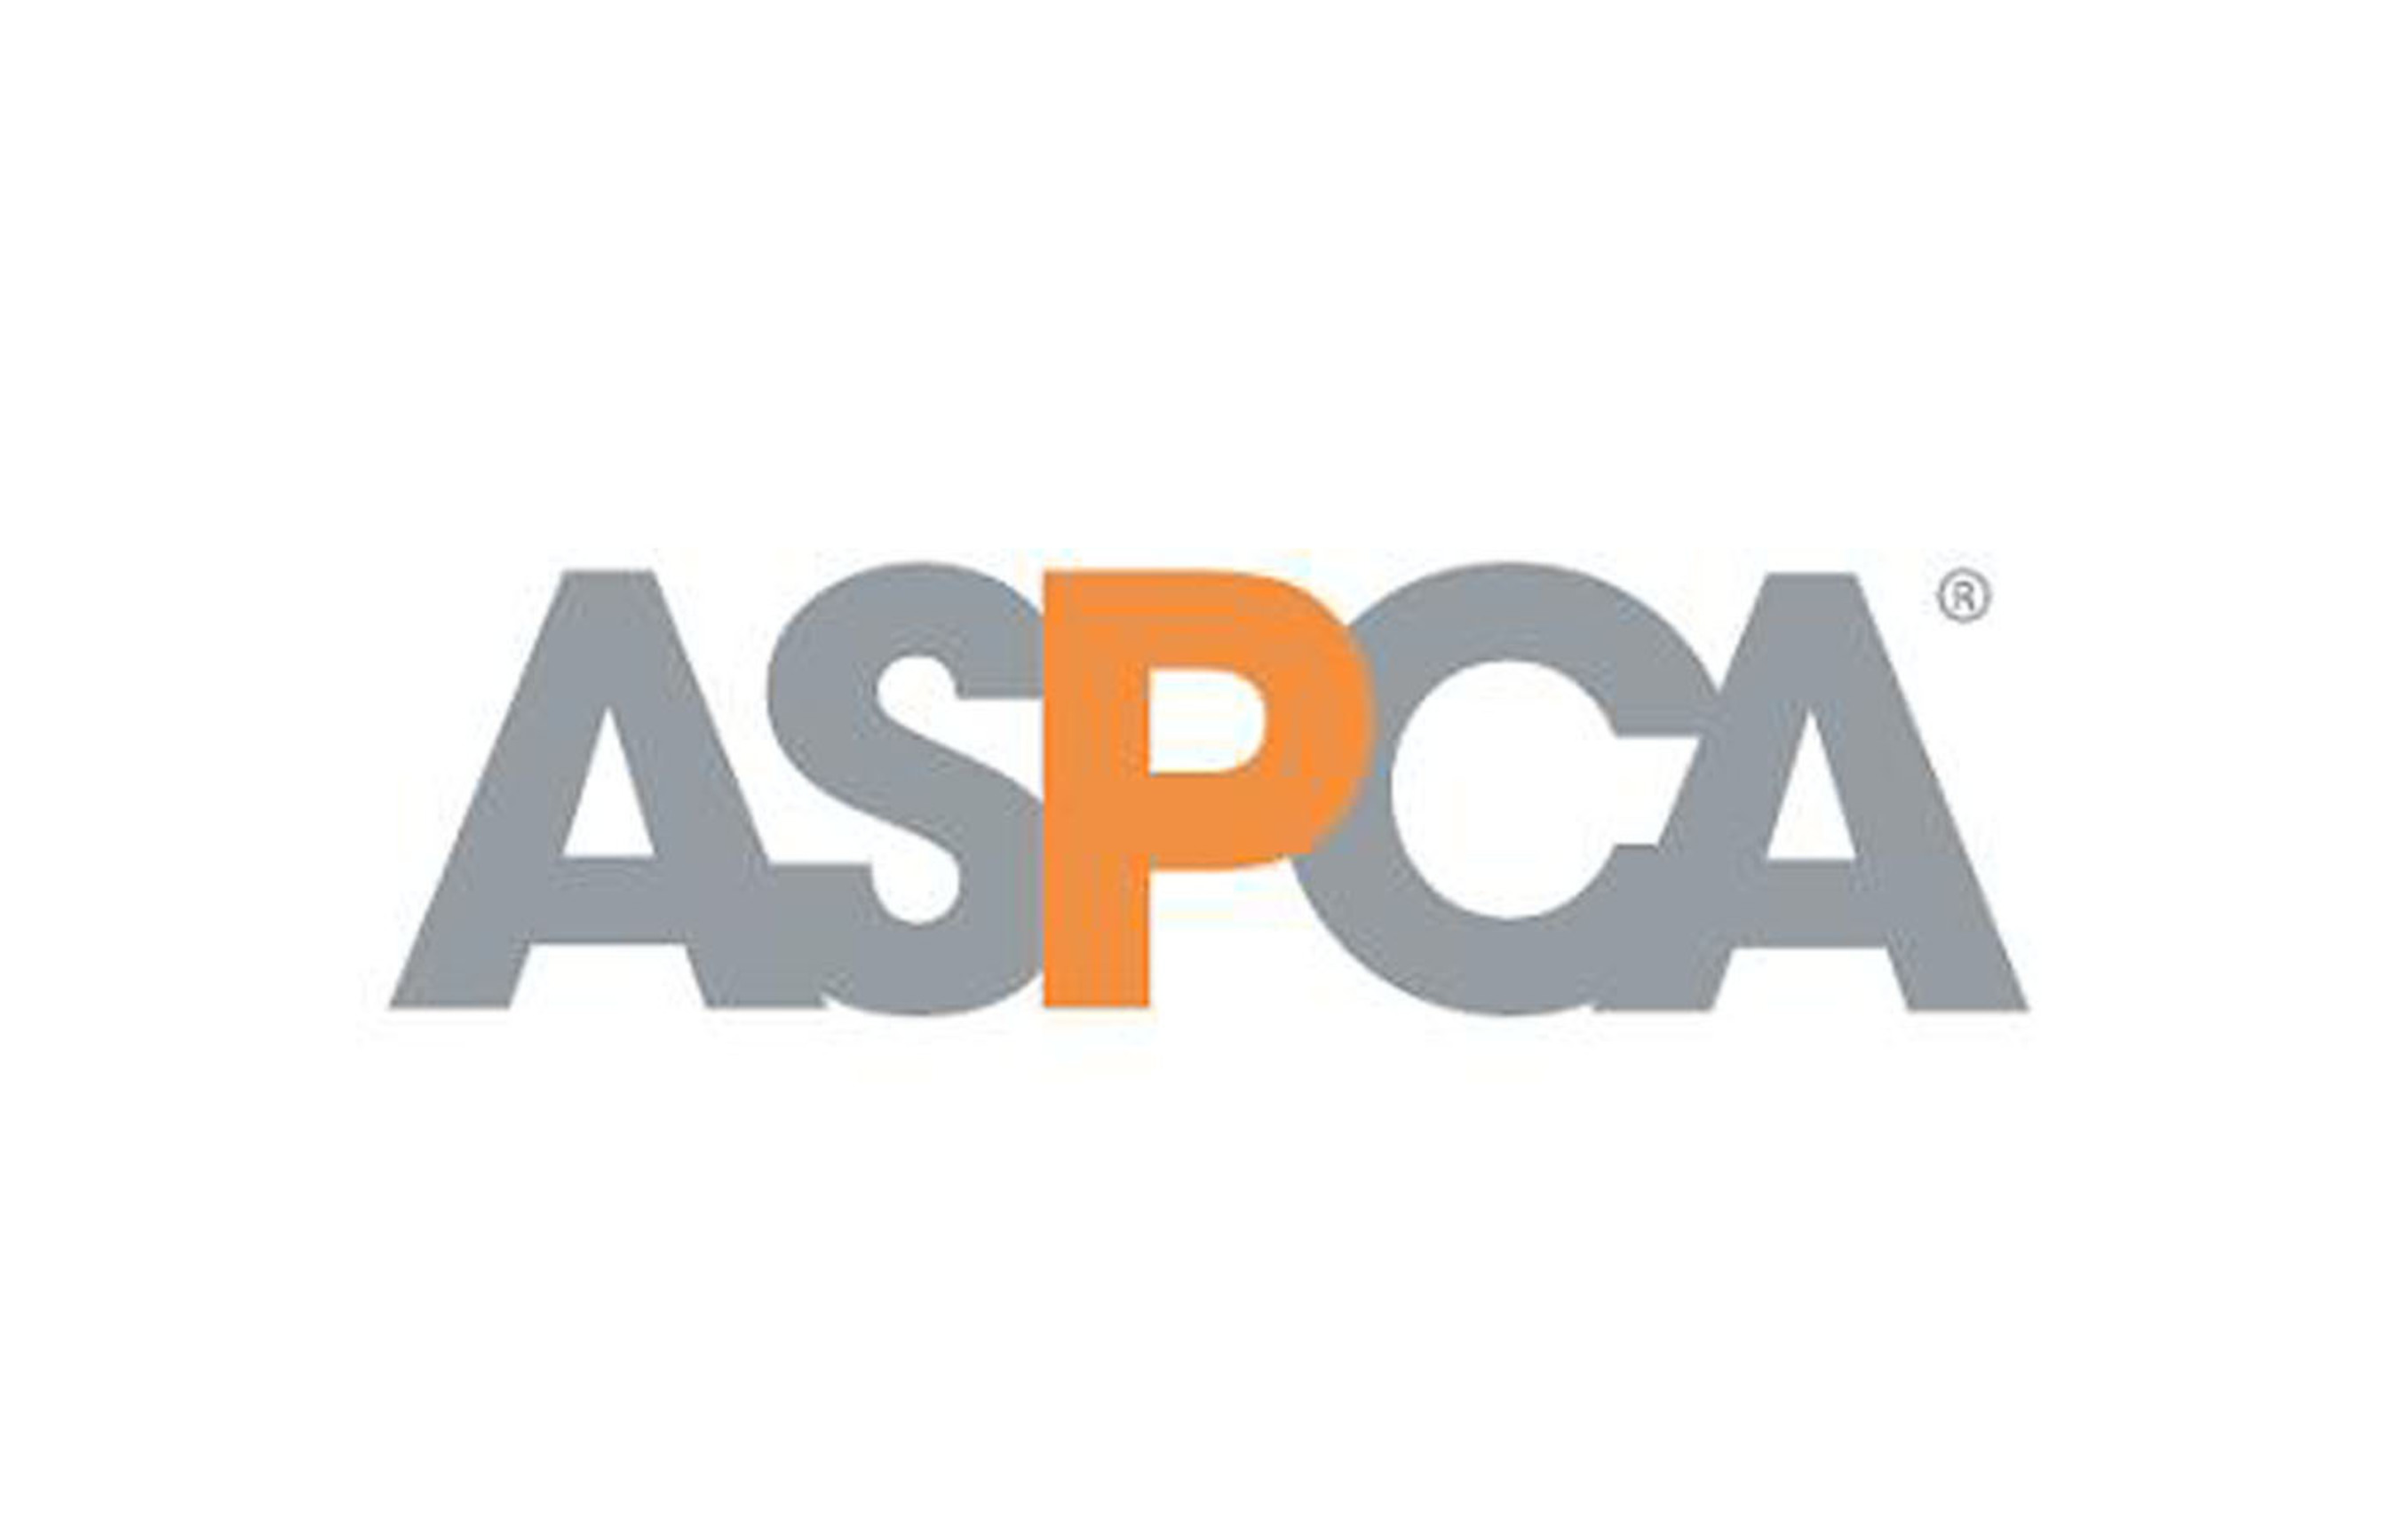 ASPCA logo. (PRNewsFoto/ASPCA)